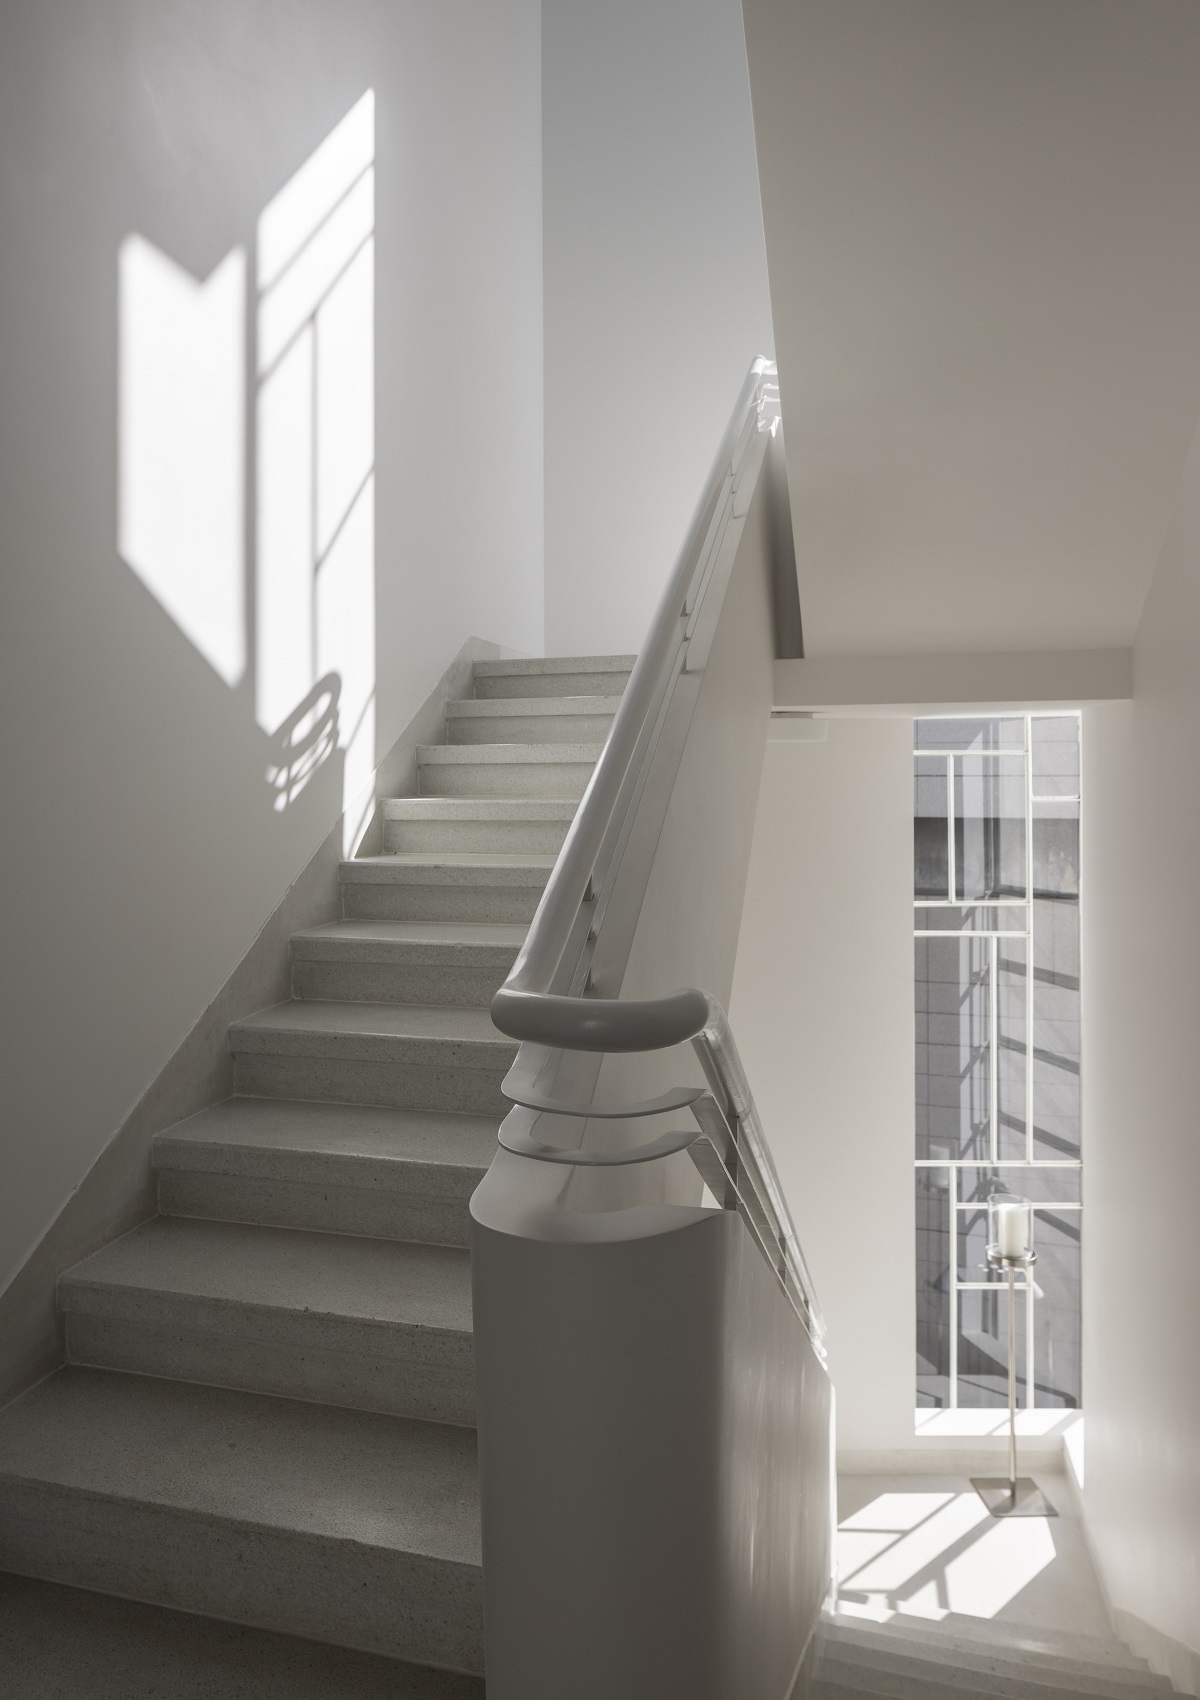 bauhaus style staircase and windowsin R48 tel aviv